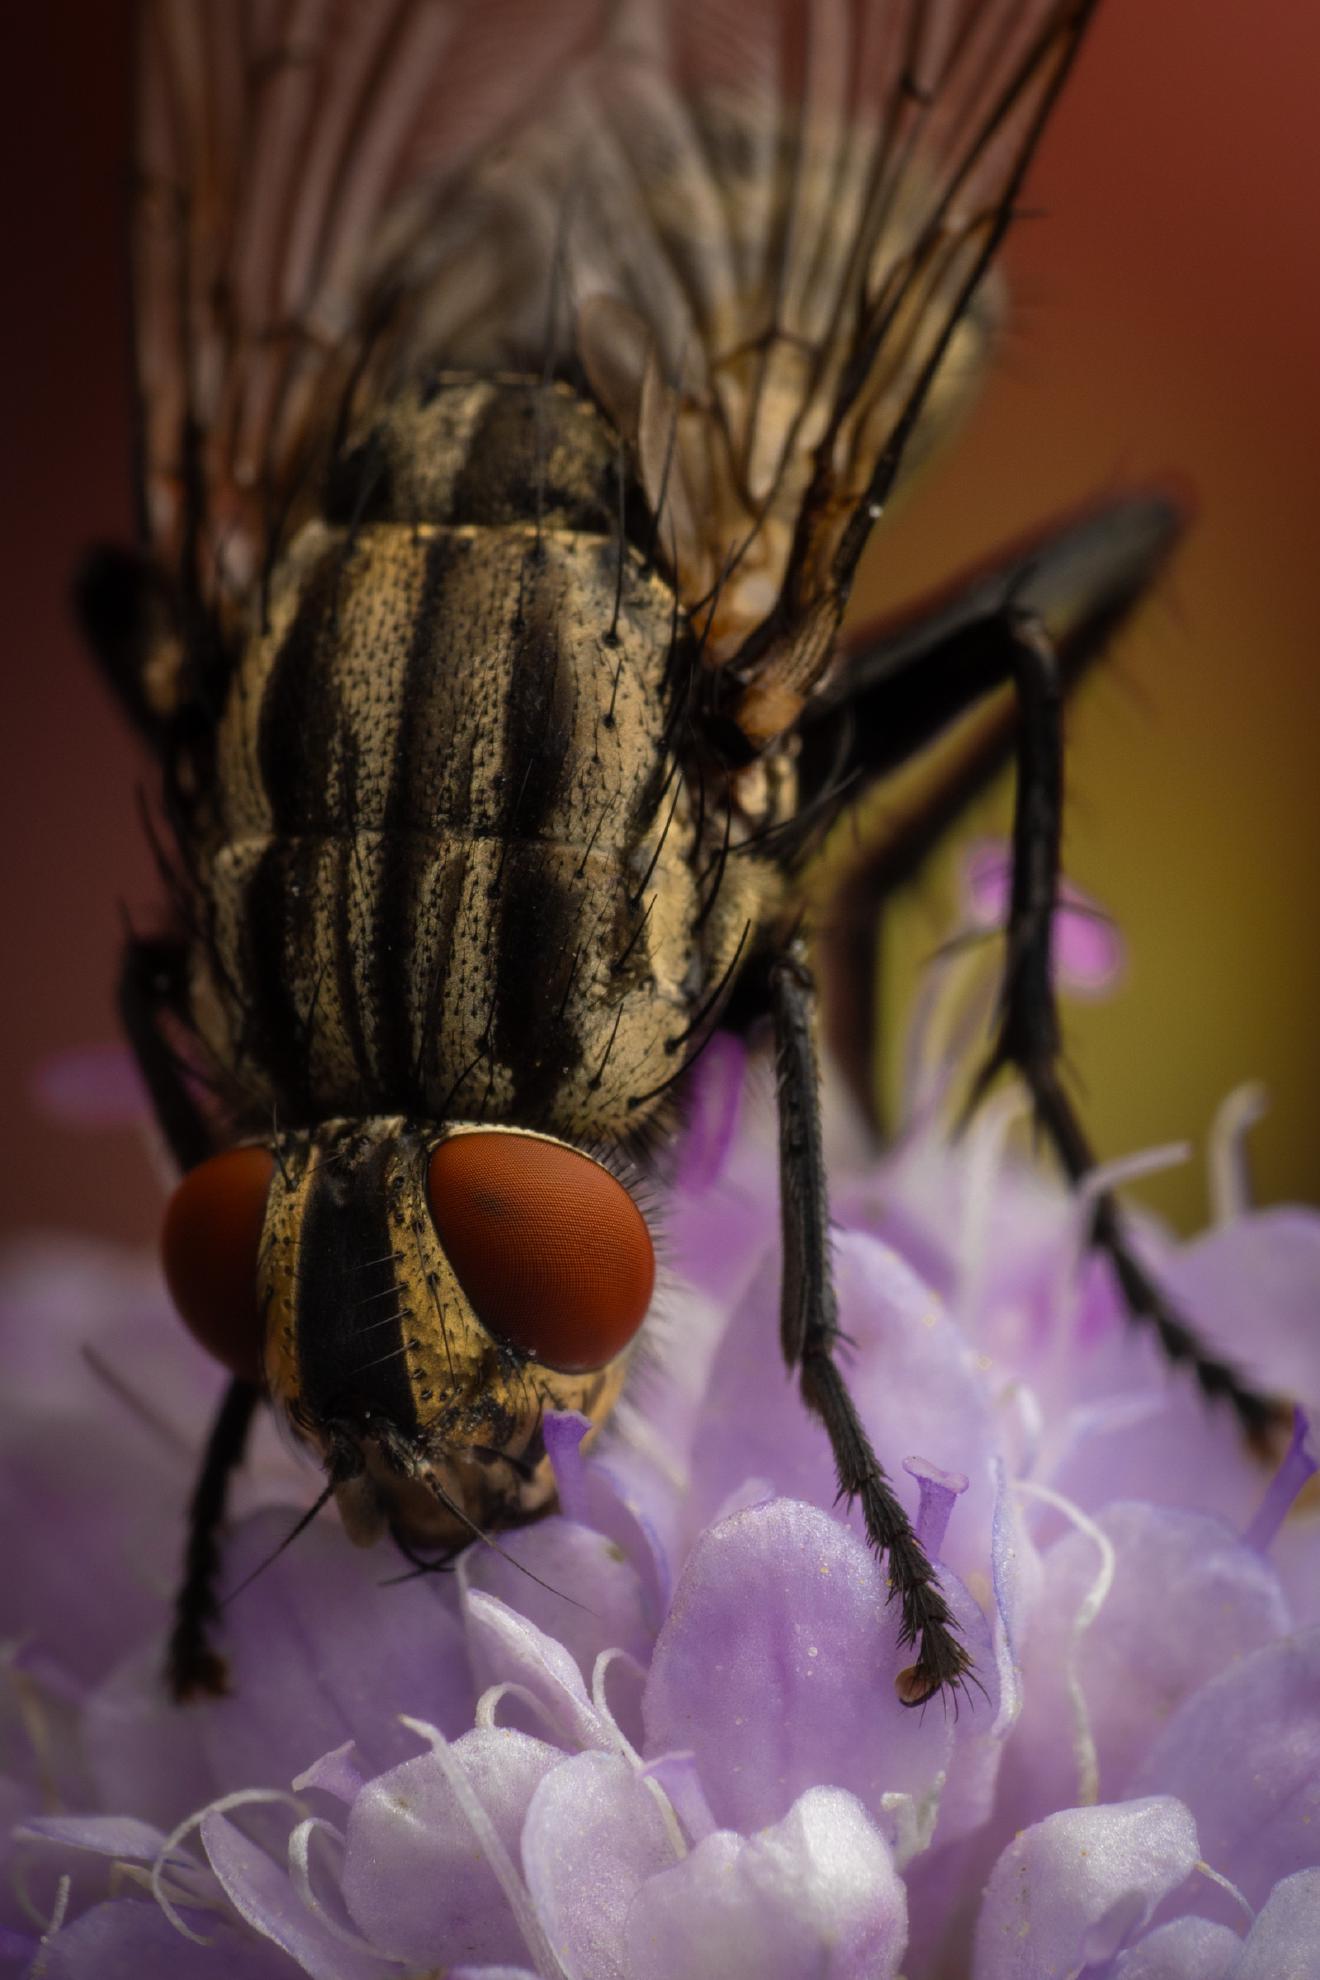 Common Flesh Fly – No. 4